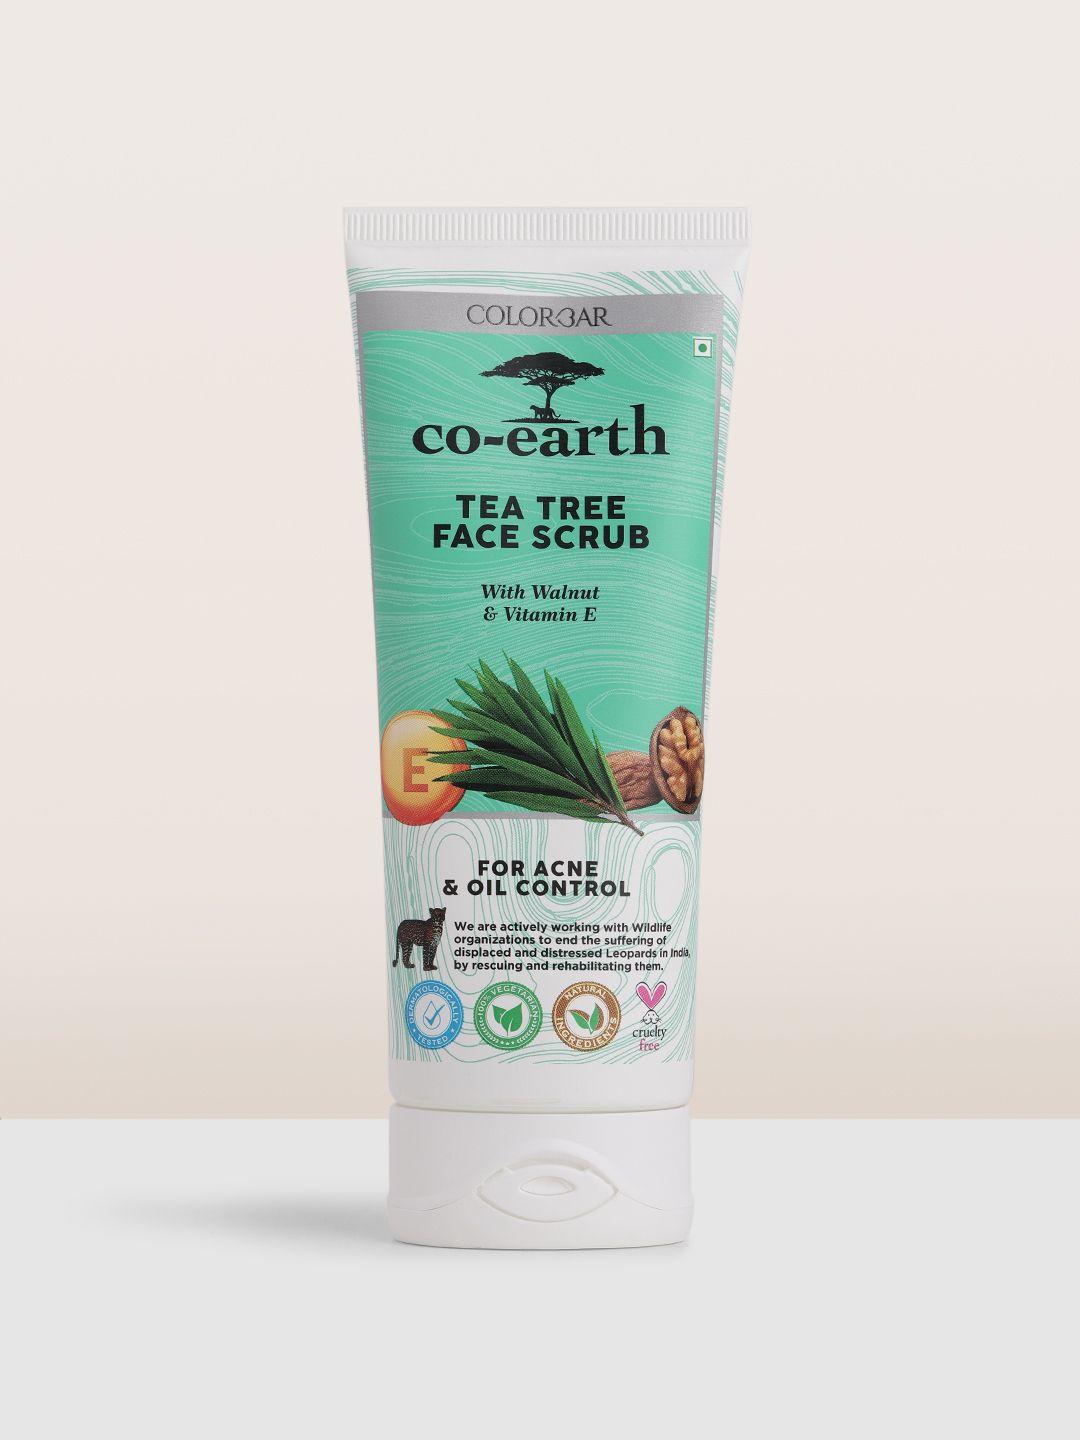 colorbar co-earth tea tree face scrub with vitamin e & walnut - 100 g